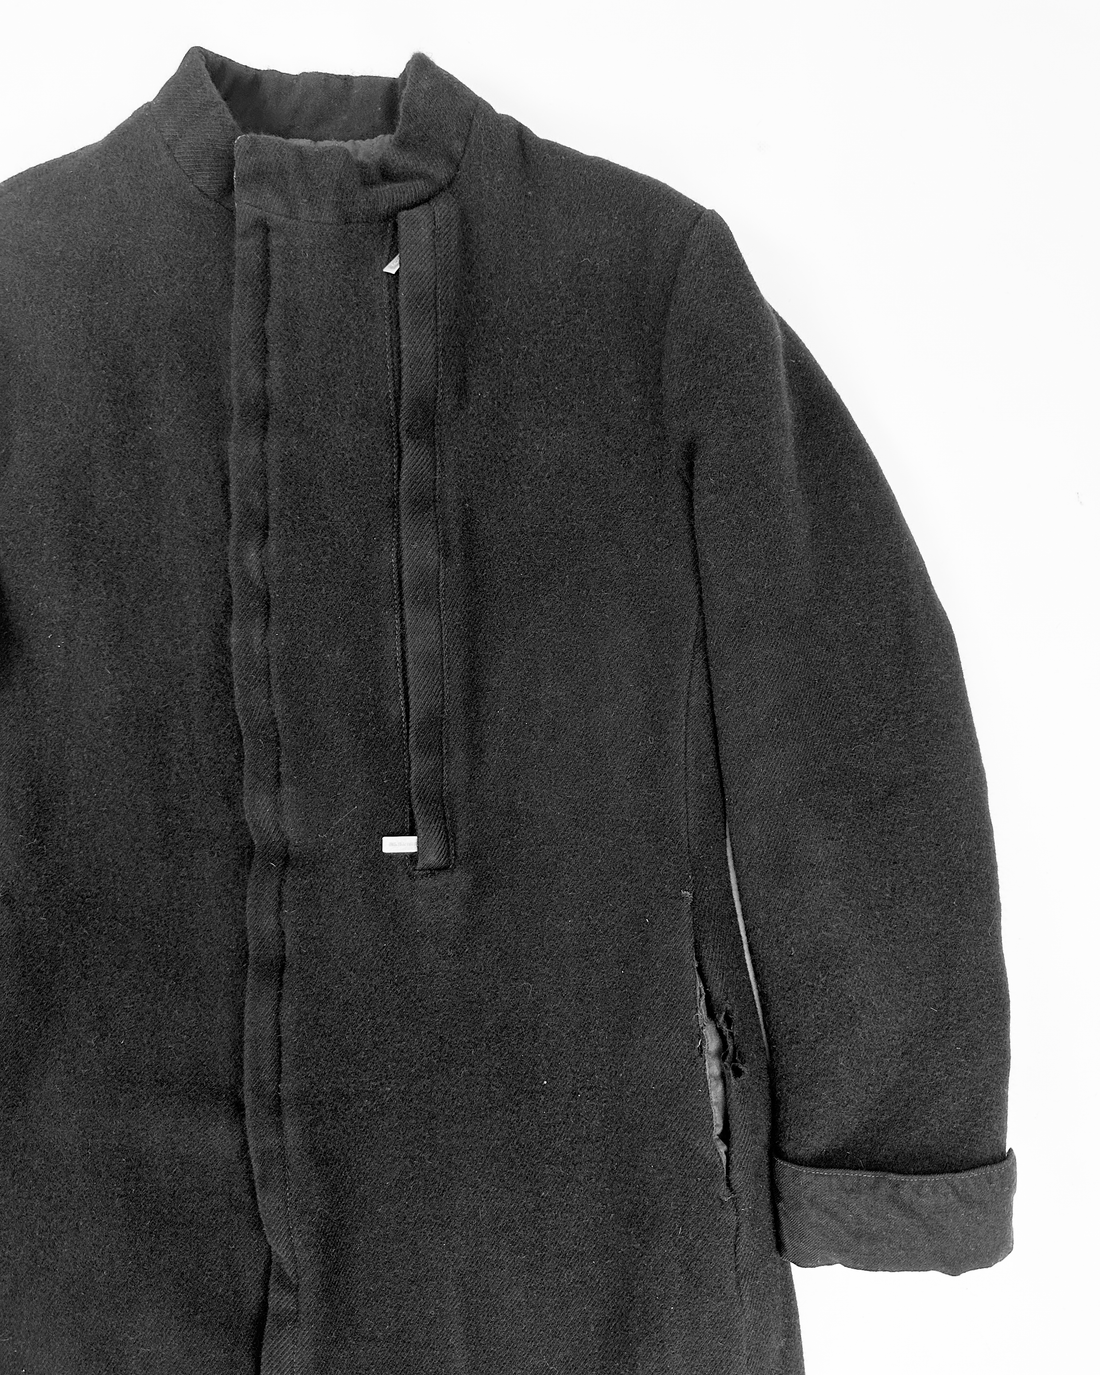 Dirk Bikkembergs Black Long Utility Coat 1990's